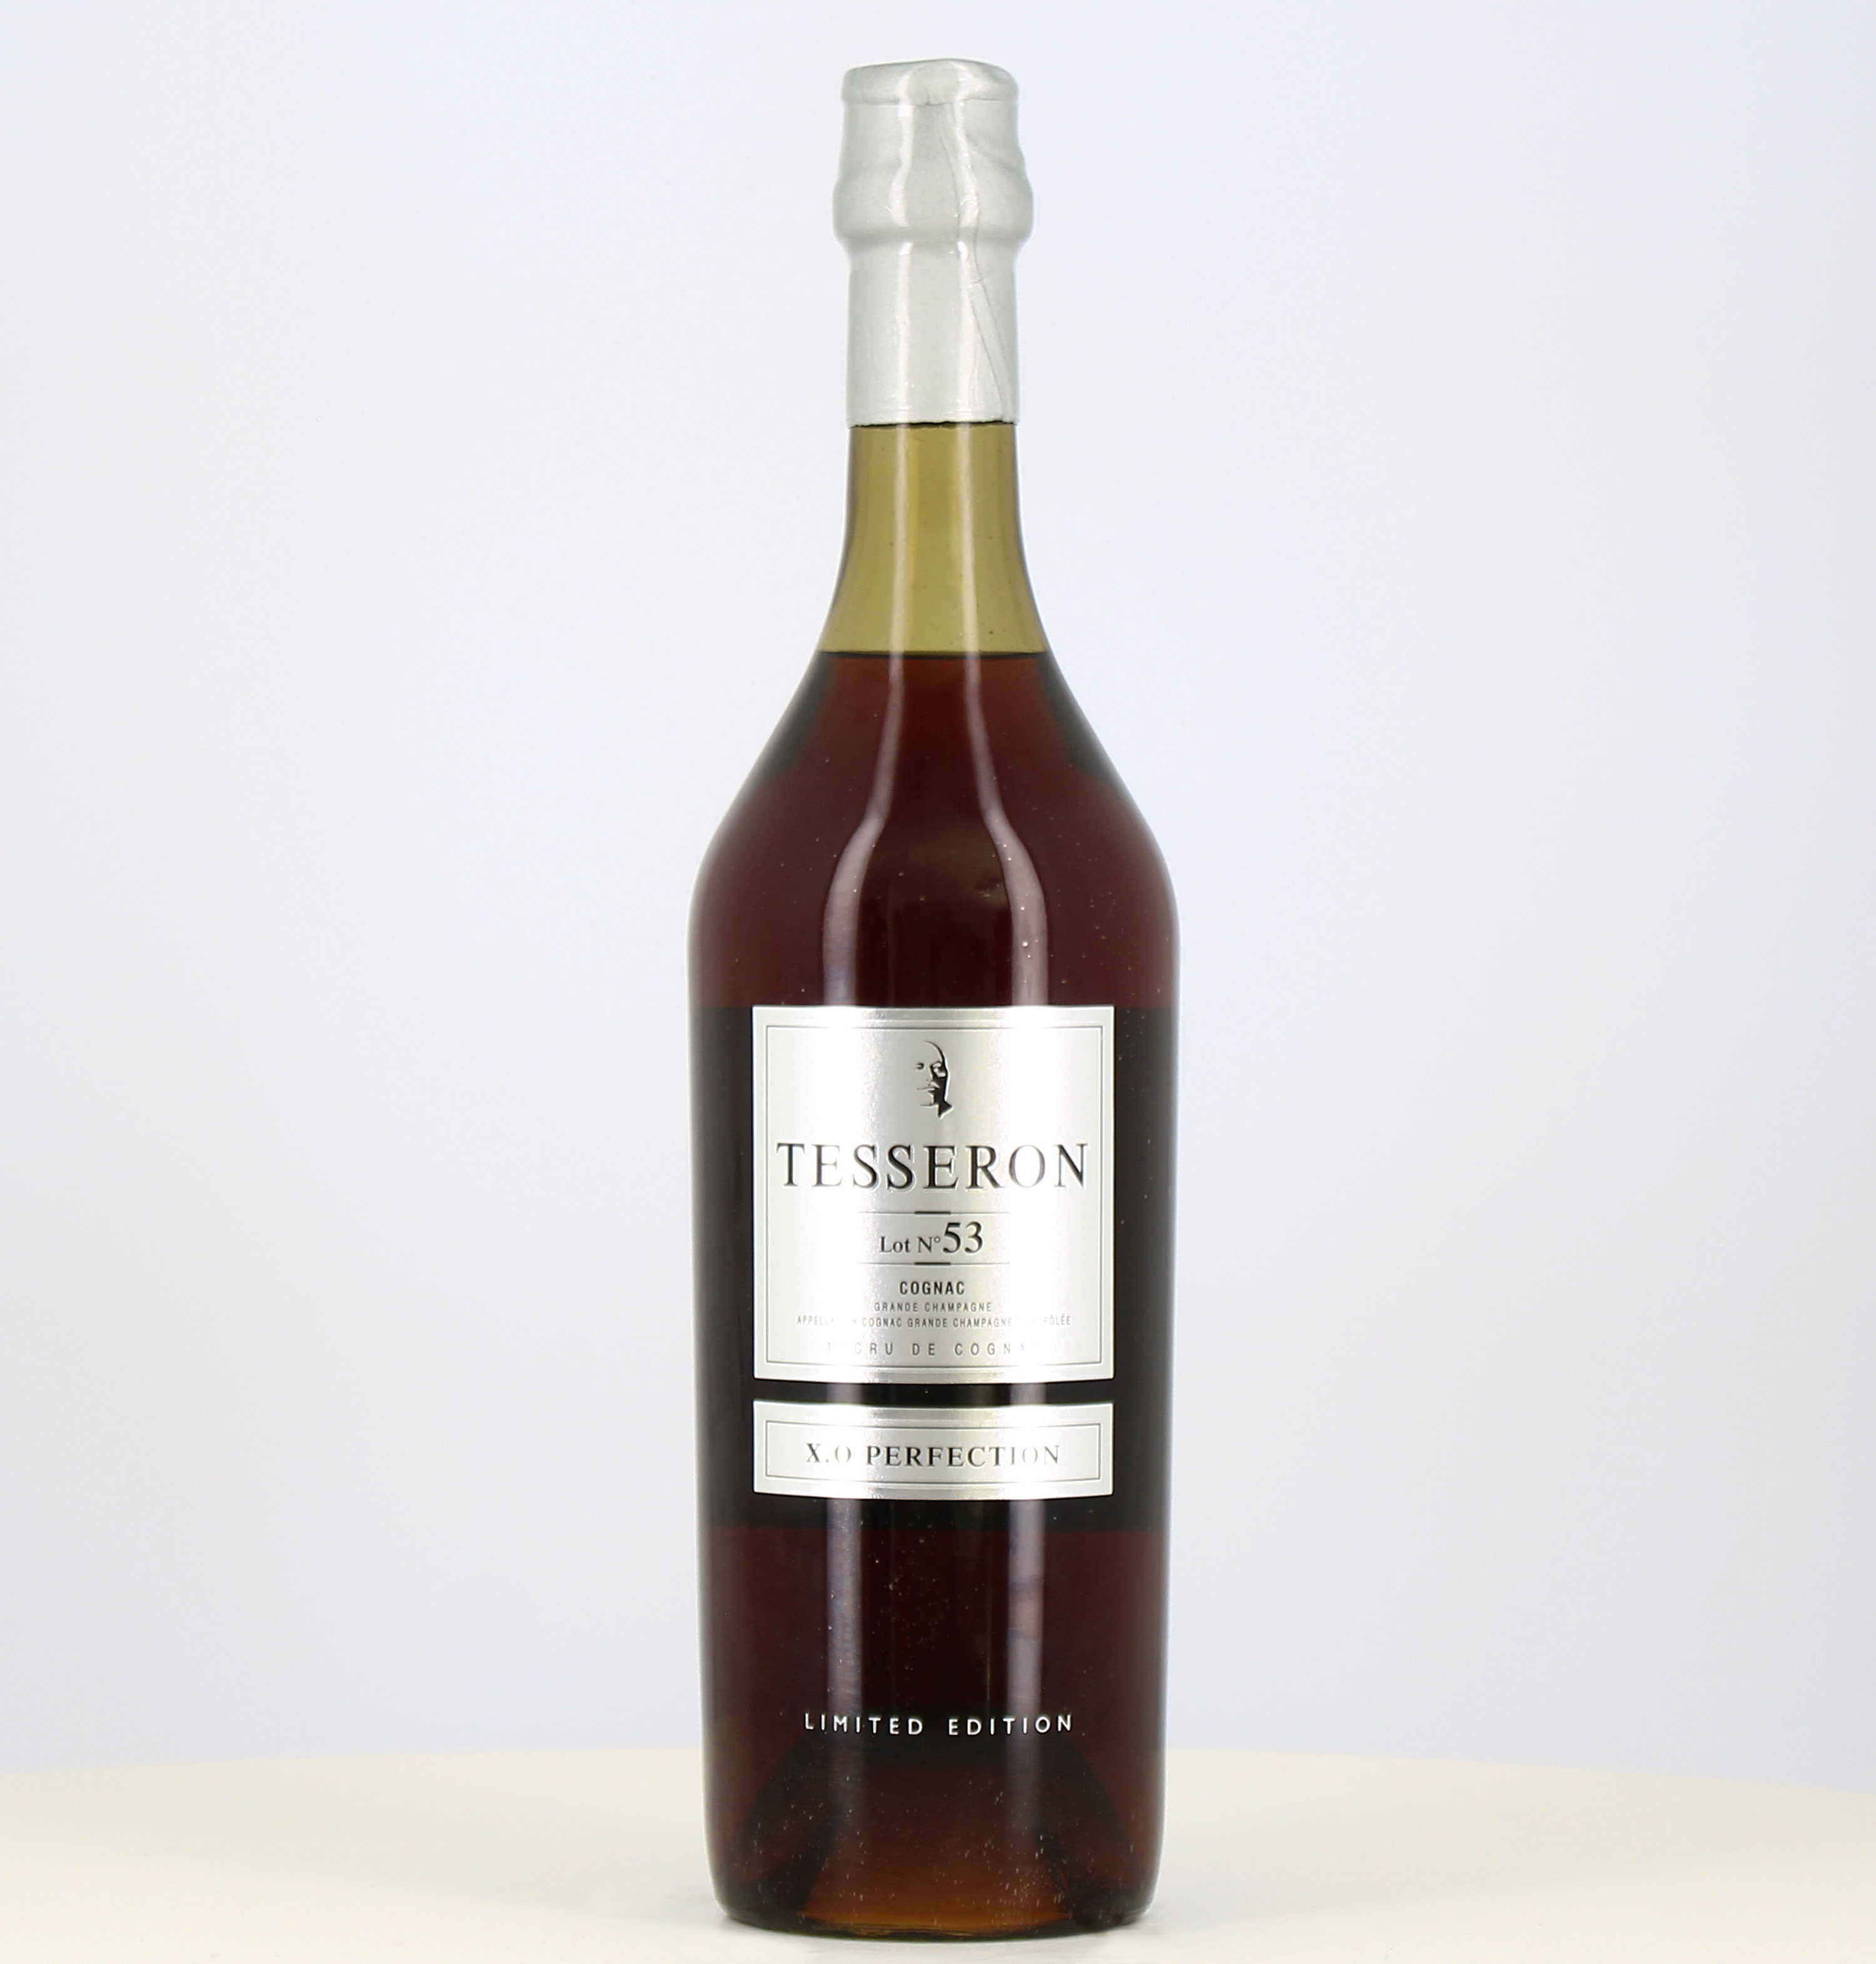 Magnum cognac Tesseron lot n53 1er Cru de cognac X.O Perfection 1,75L 